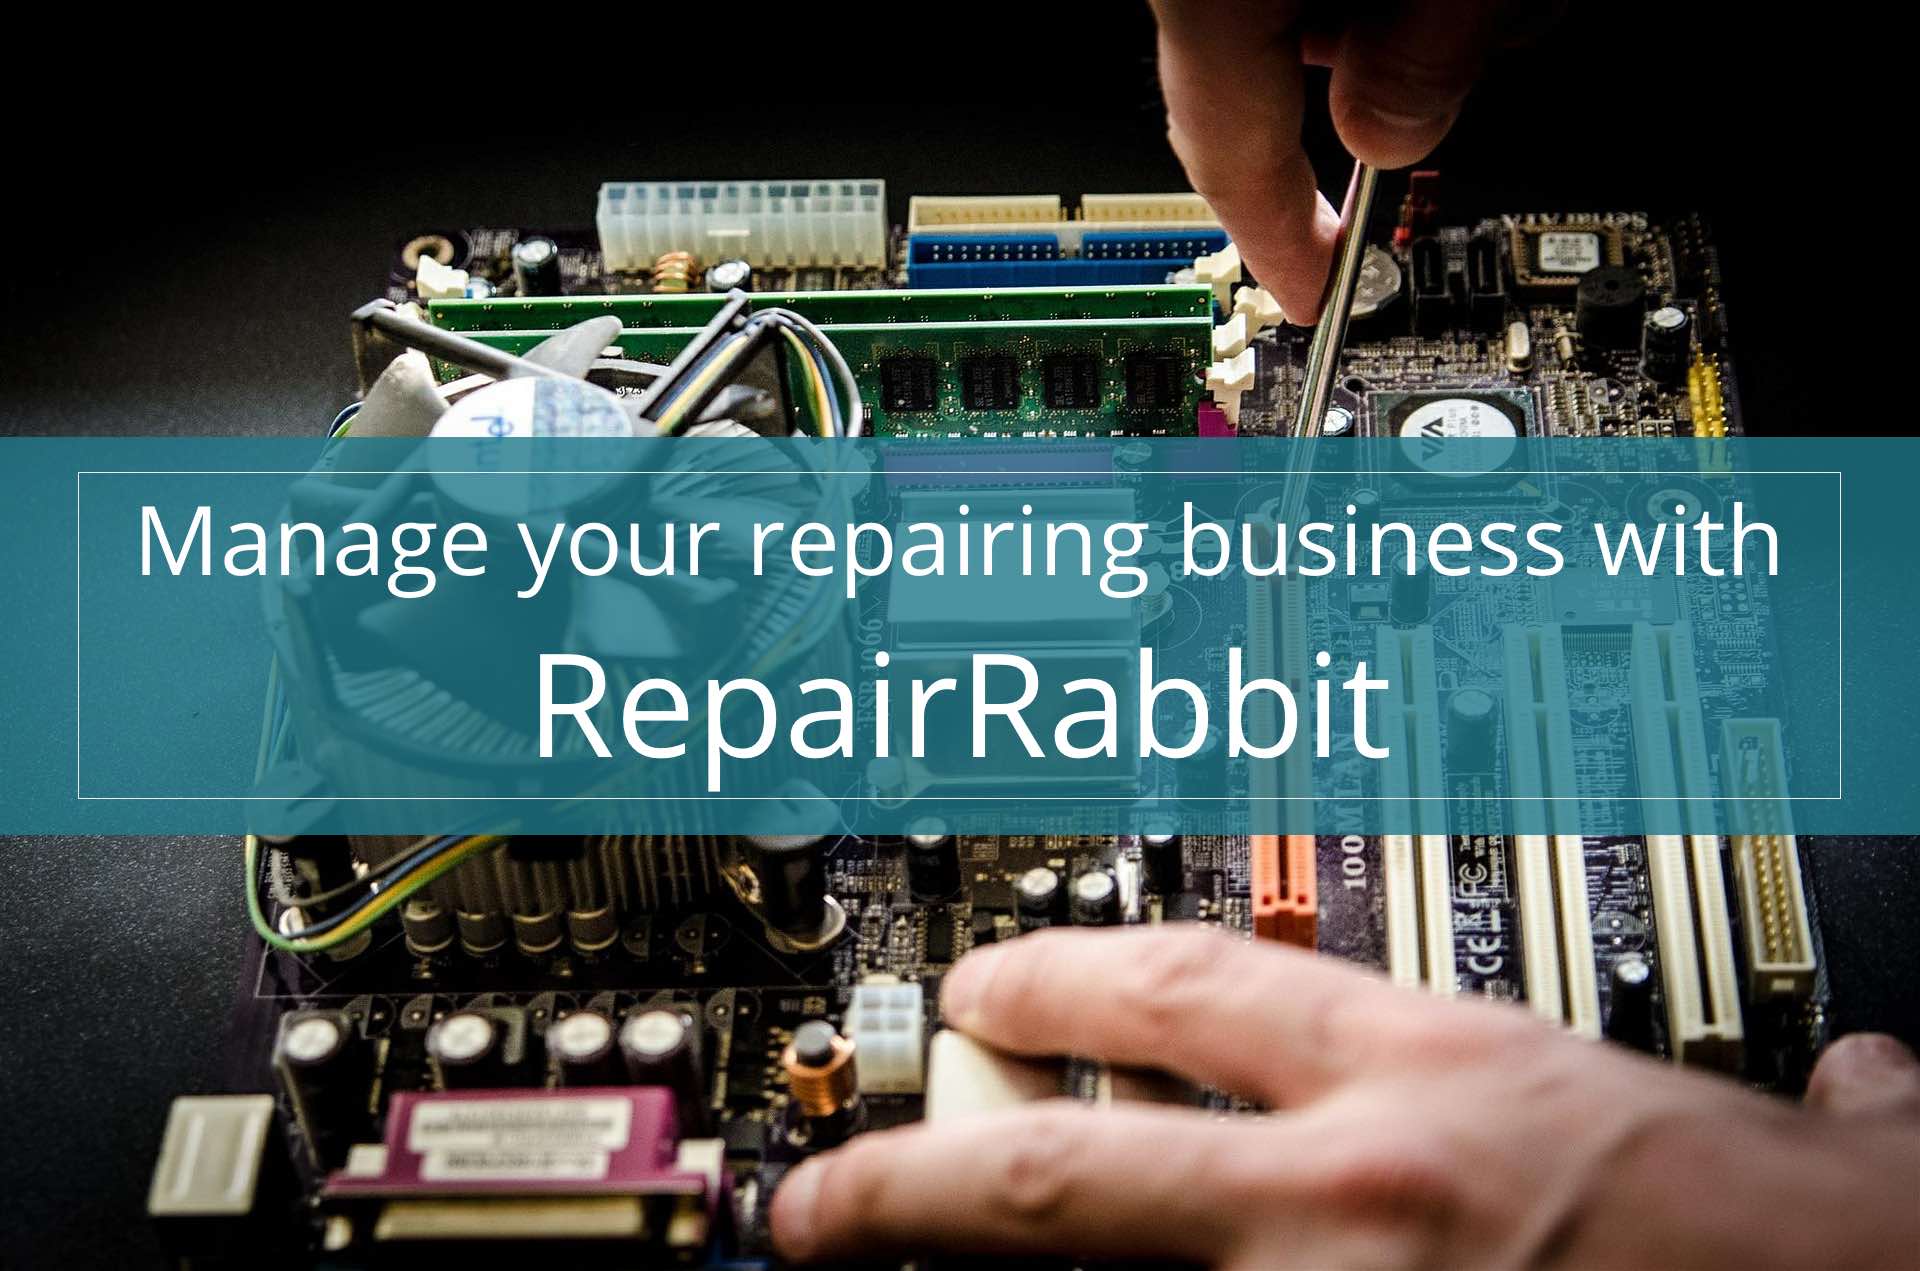 Introduction to RepairRabbit